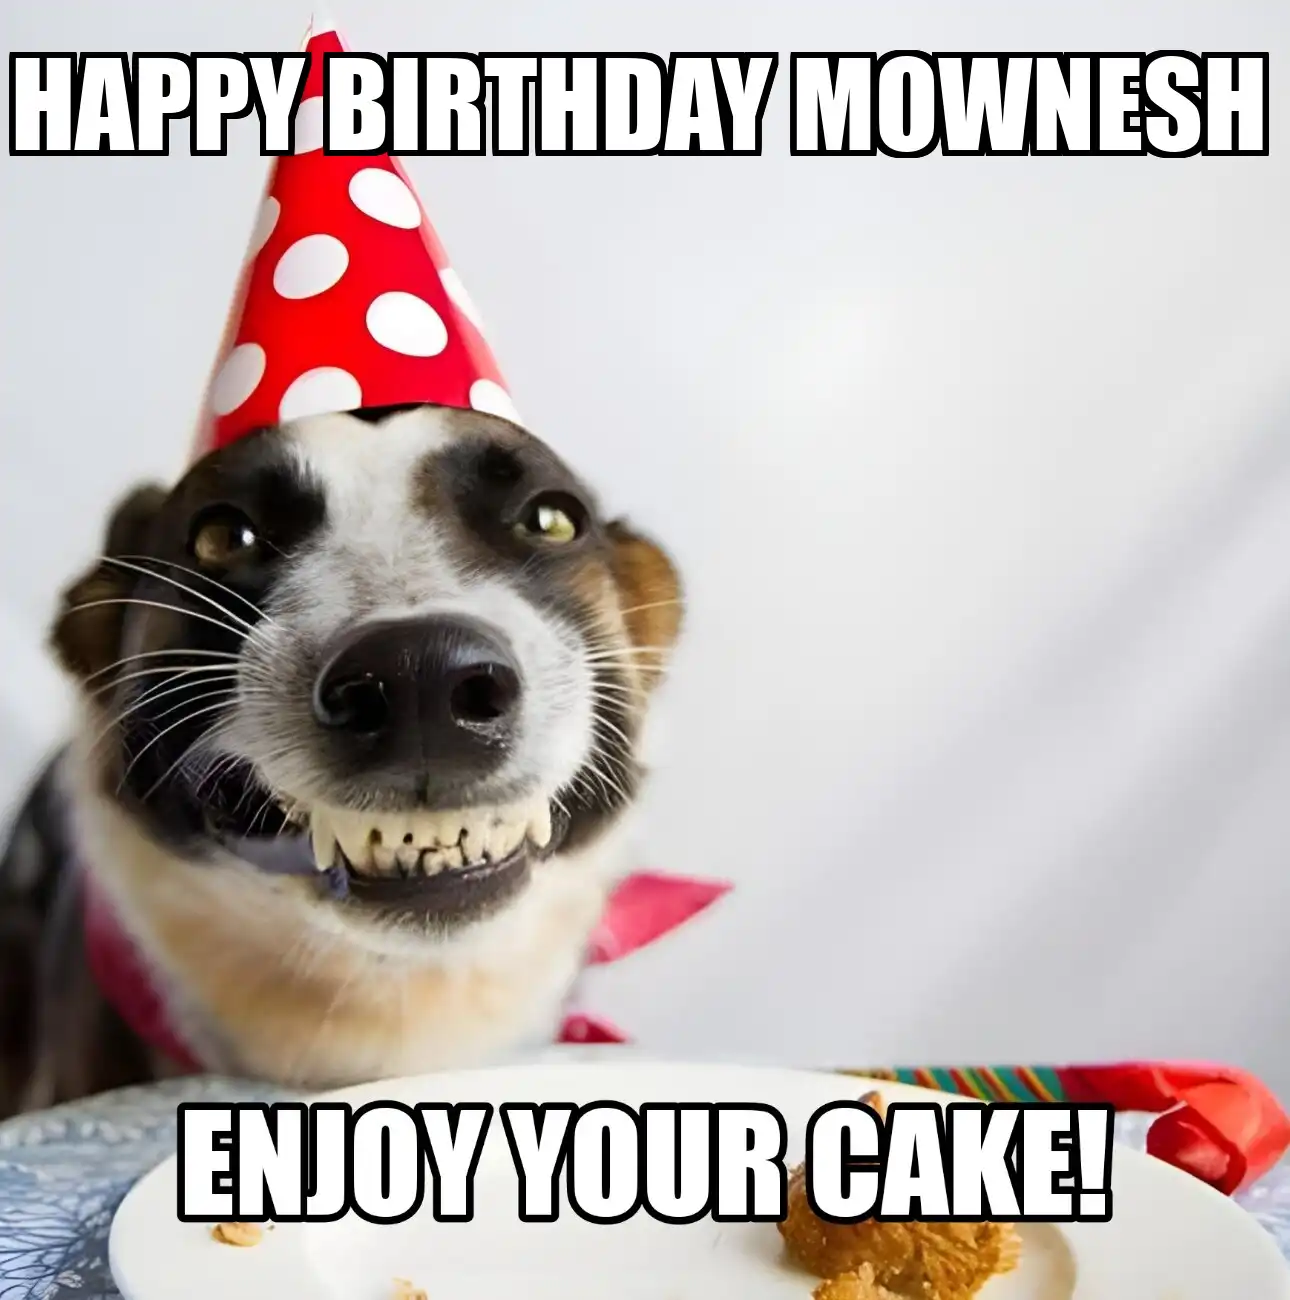 Happy Birthday Mownesh Enjoy Your Cake Dog Meme